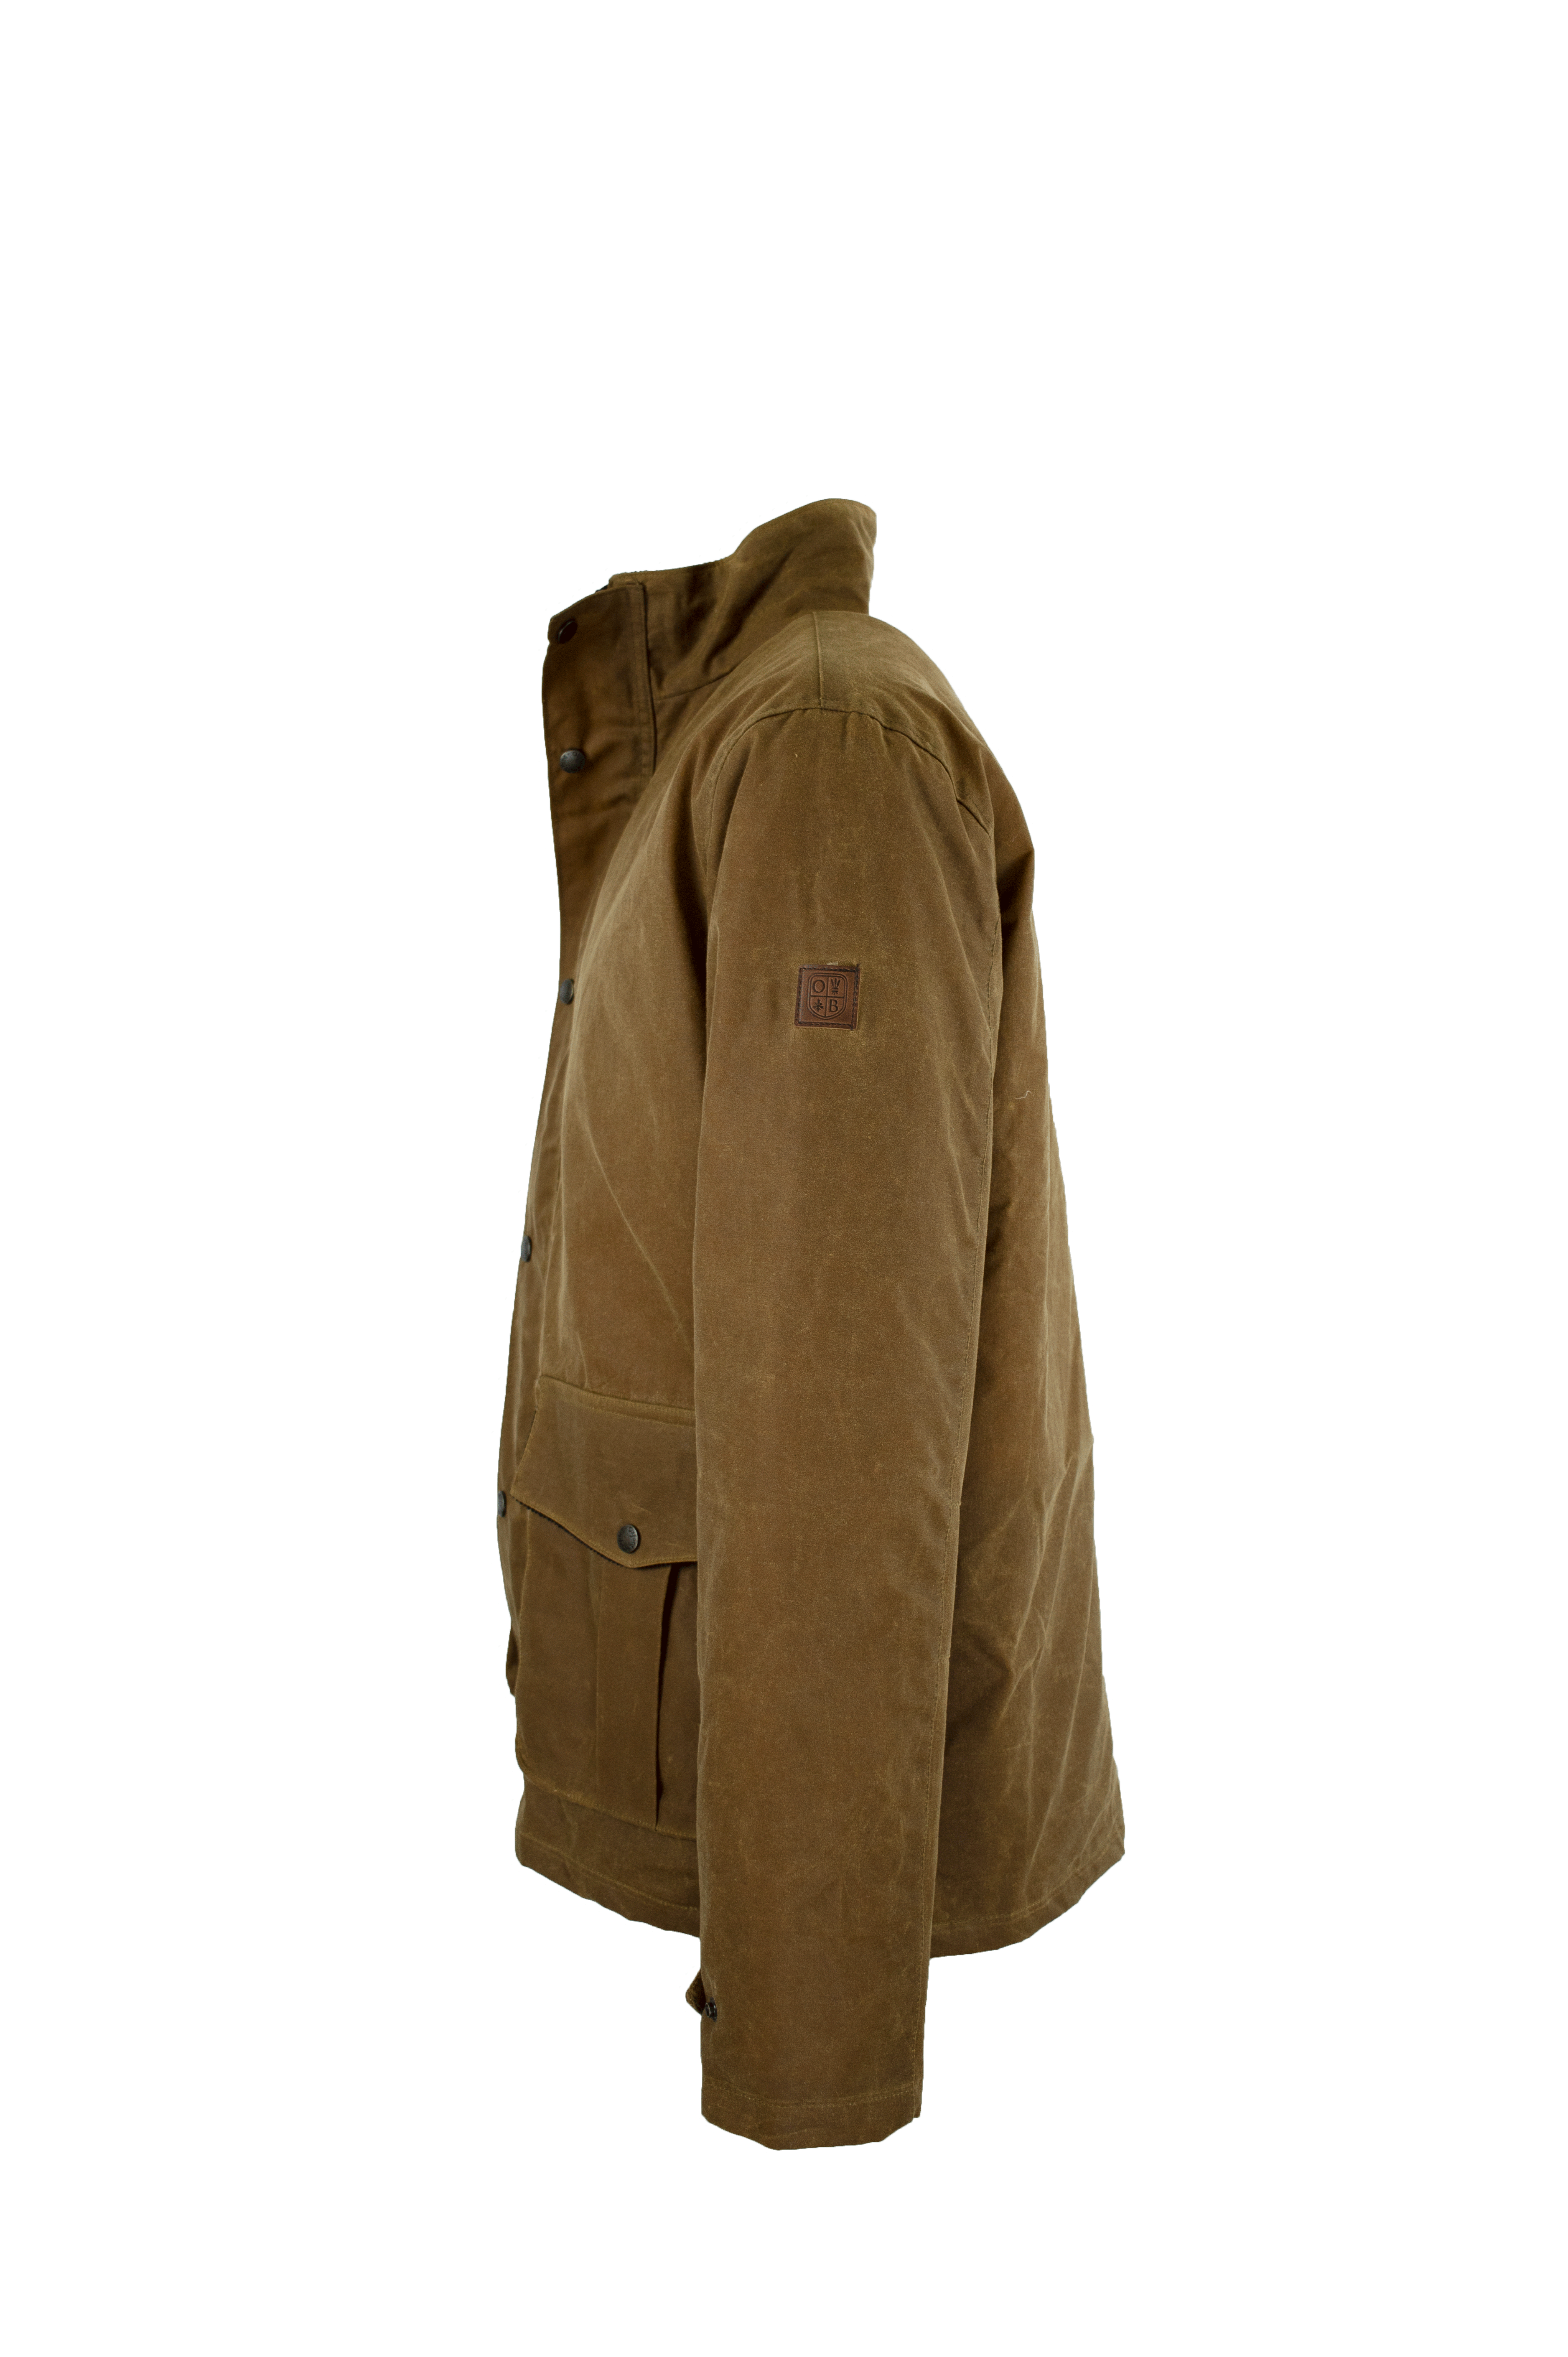 W50 - Men's Kendal Antiquity Wax Jacket - SAND